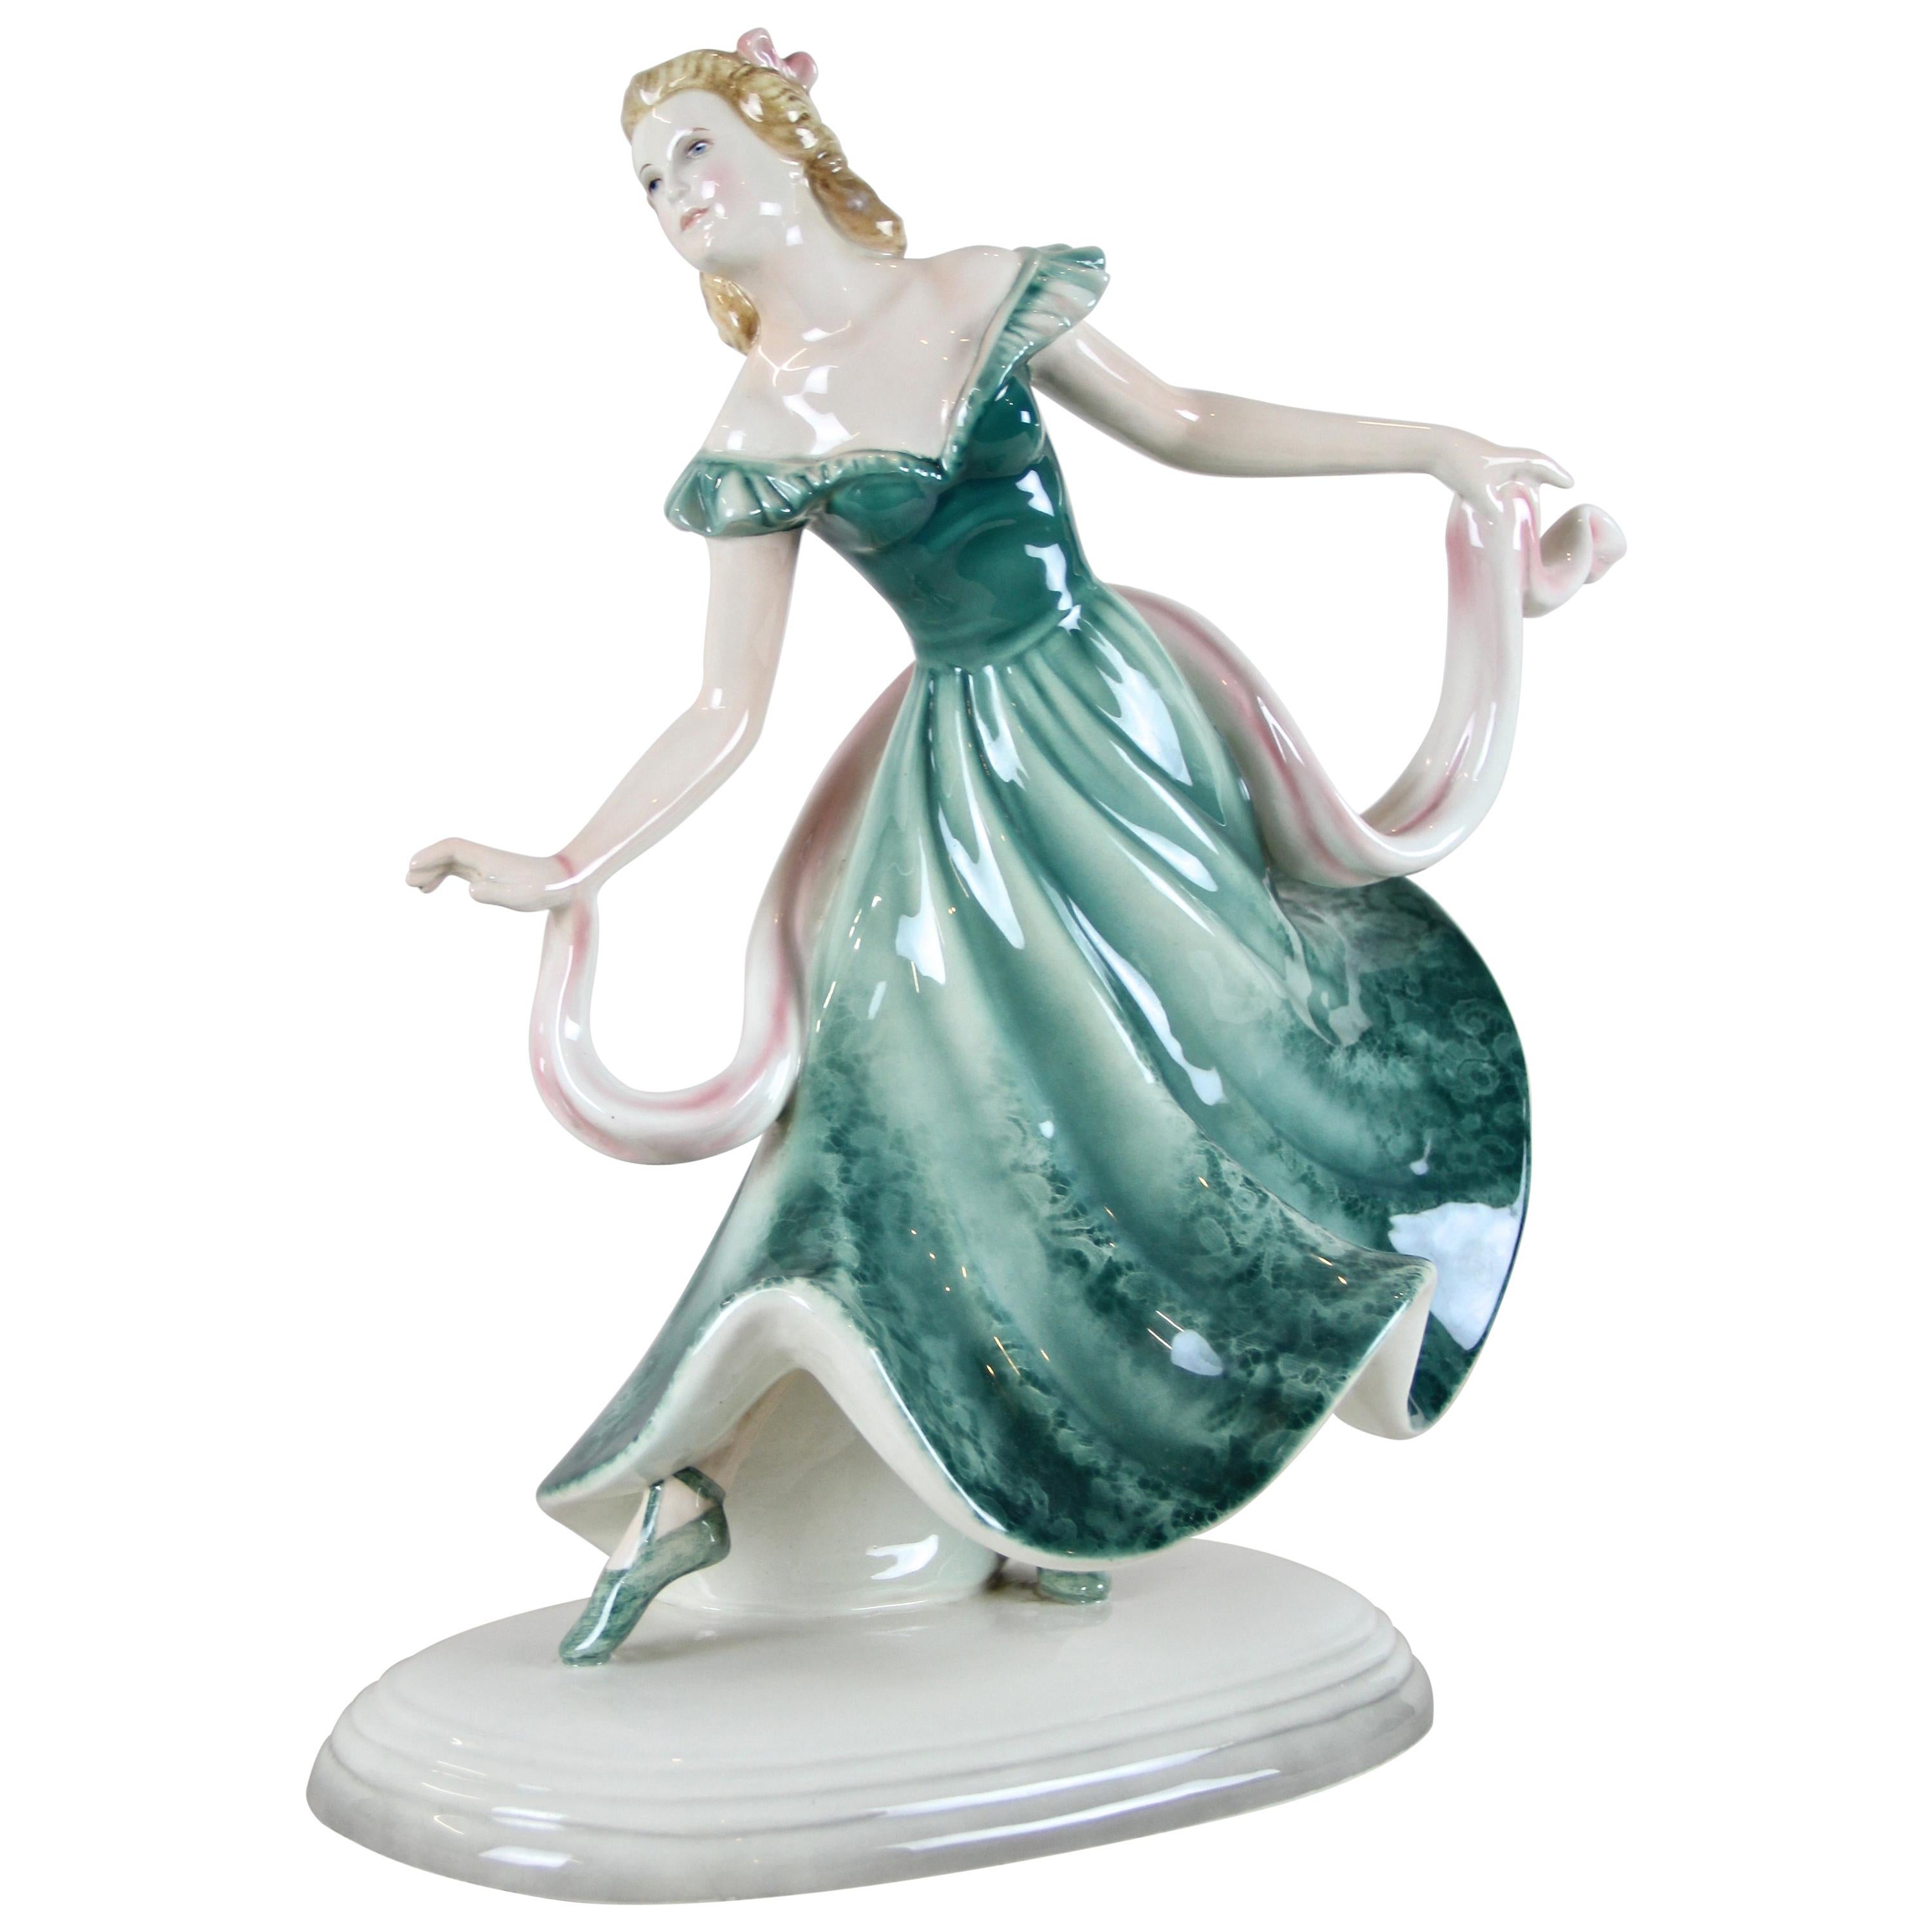 Art Deco Ceramic Sculpture "Ballerina" by Keramos Vienna, Austria, circa 1920